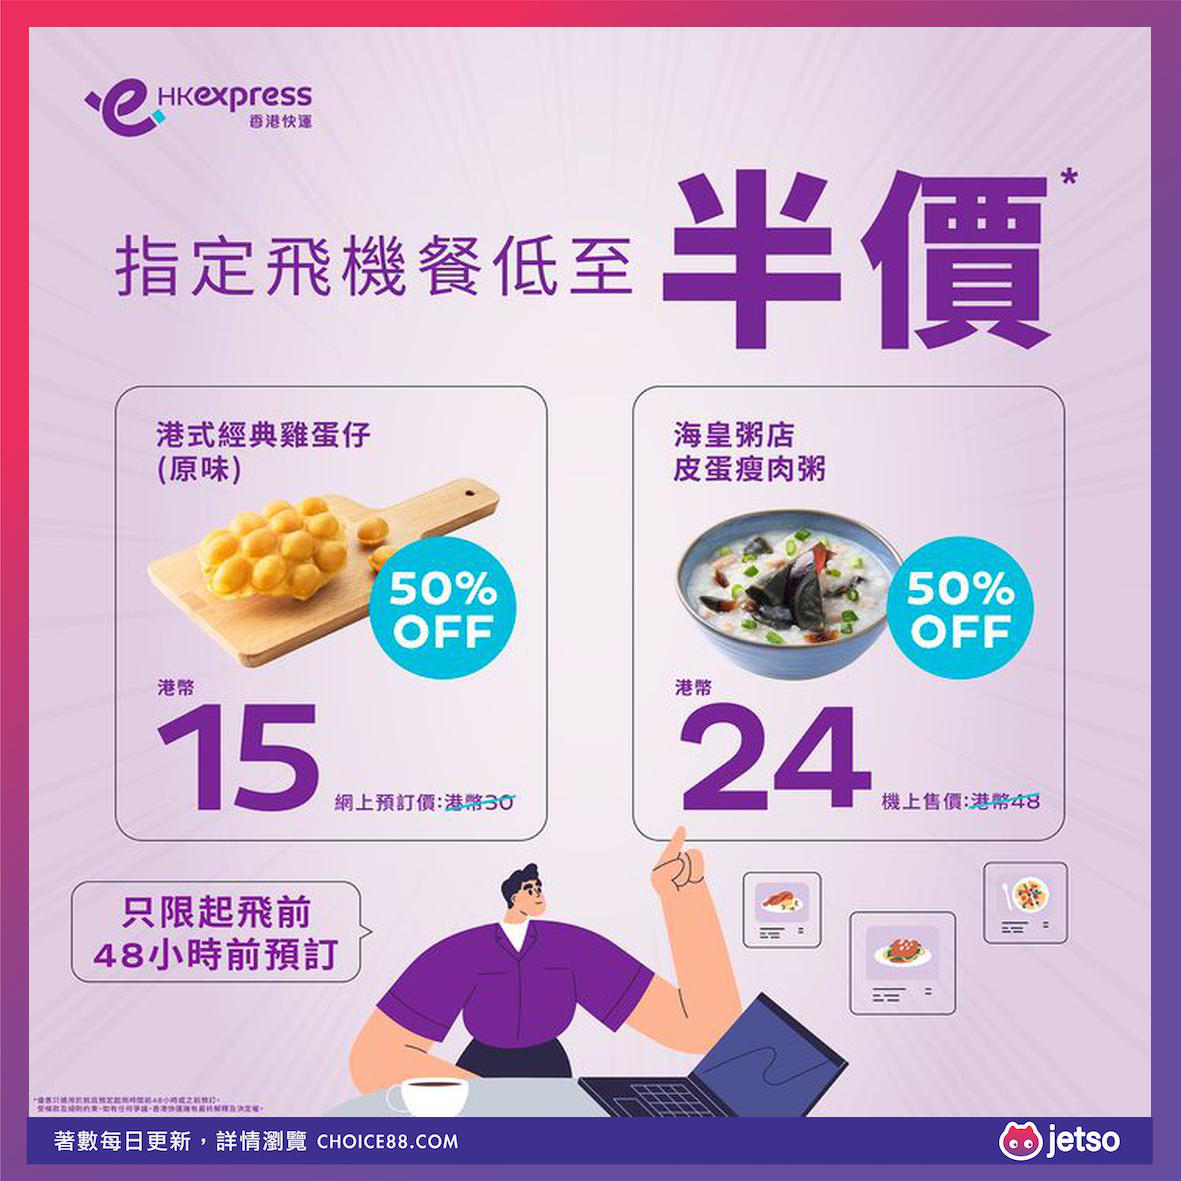 HK Express : [机票优惠]香港快运半价机上美食优惠